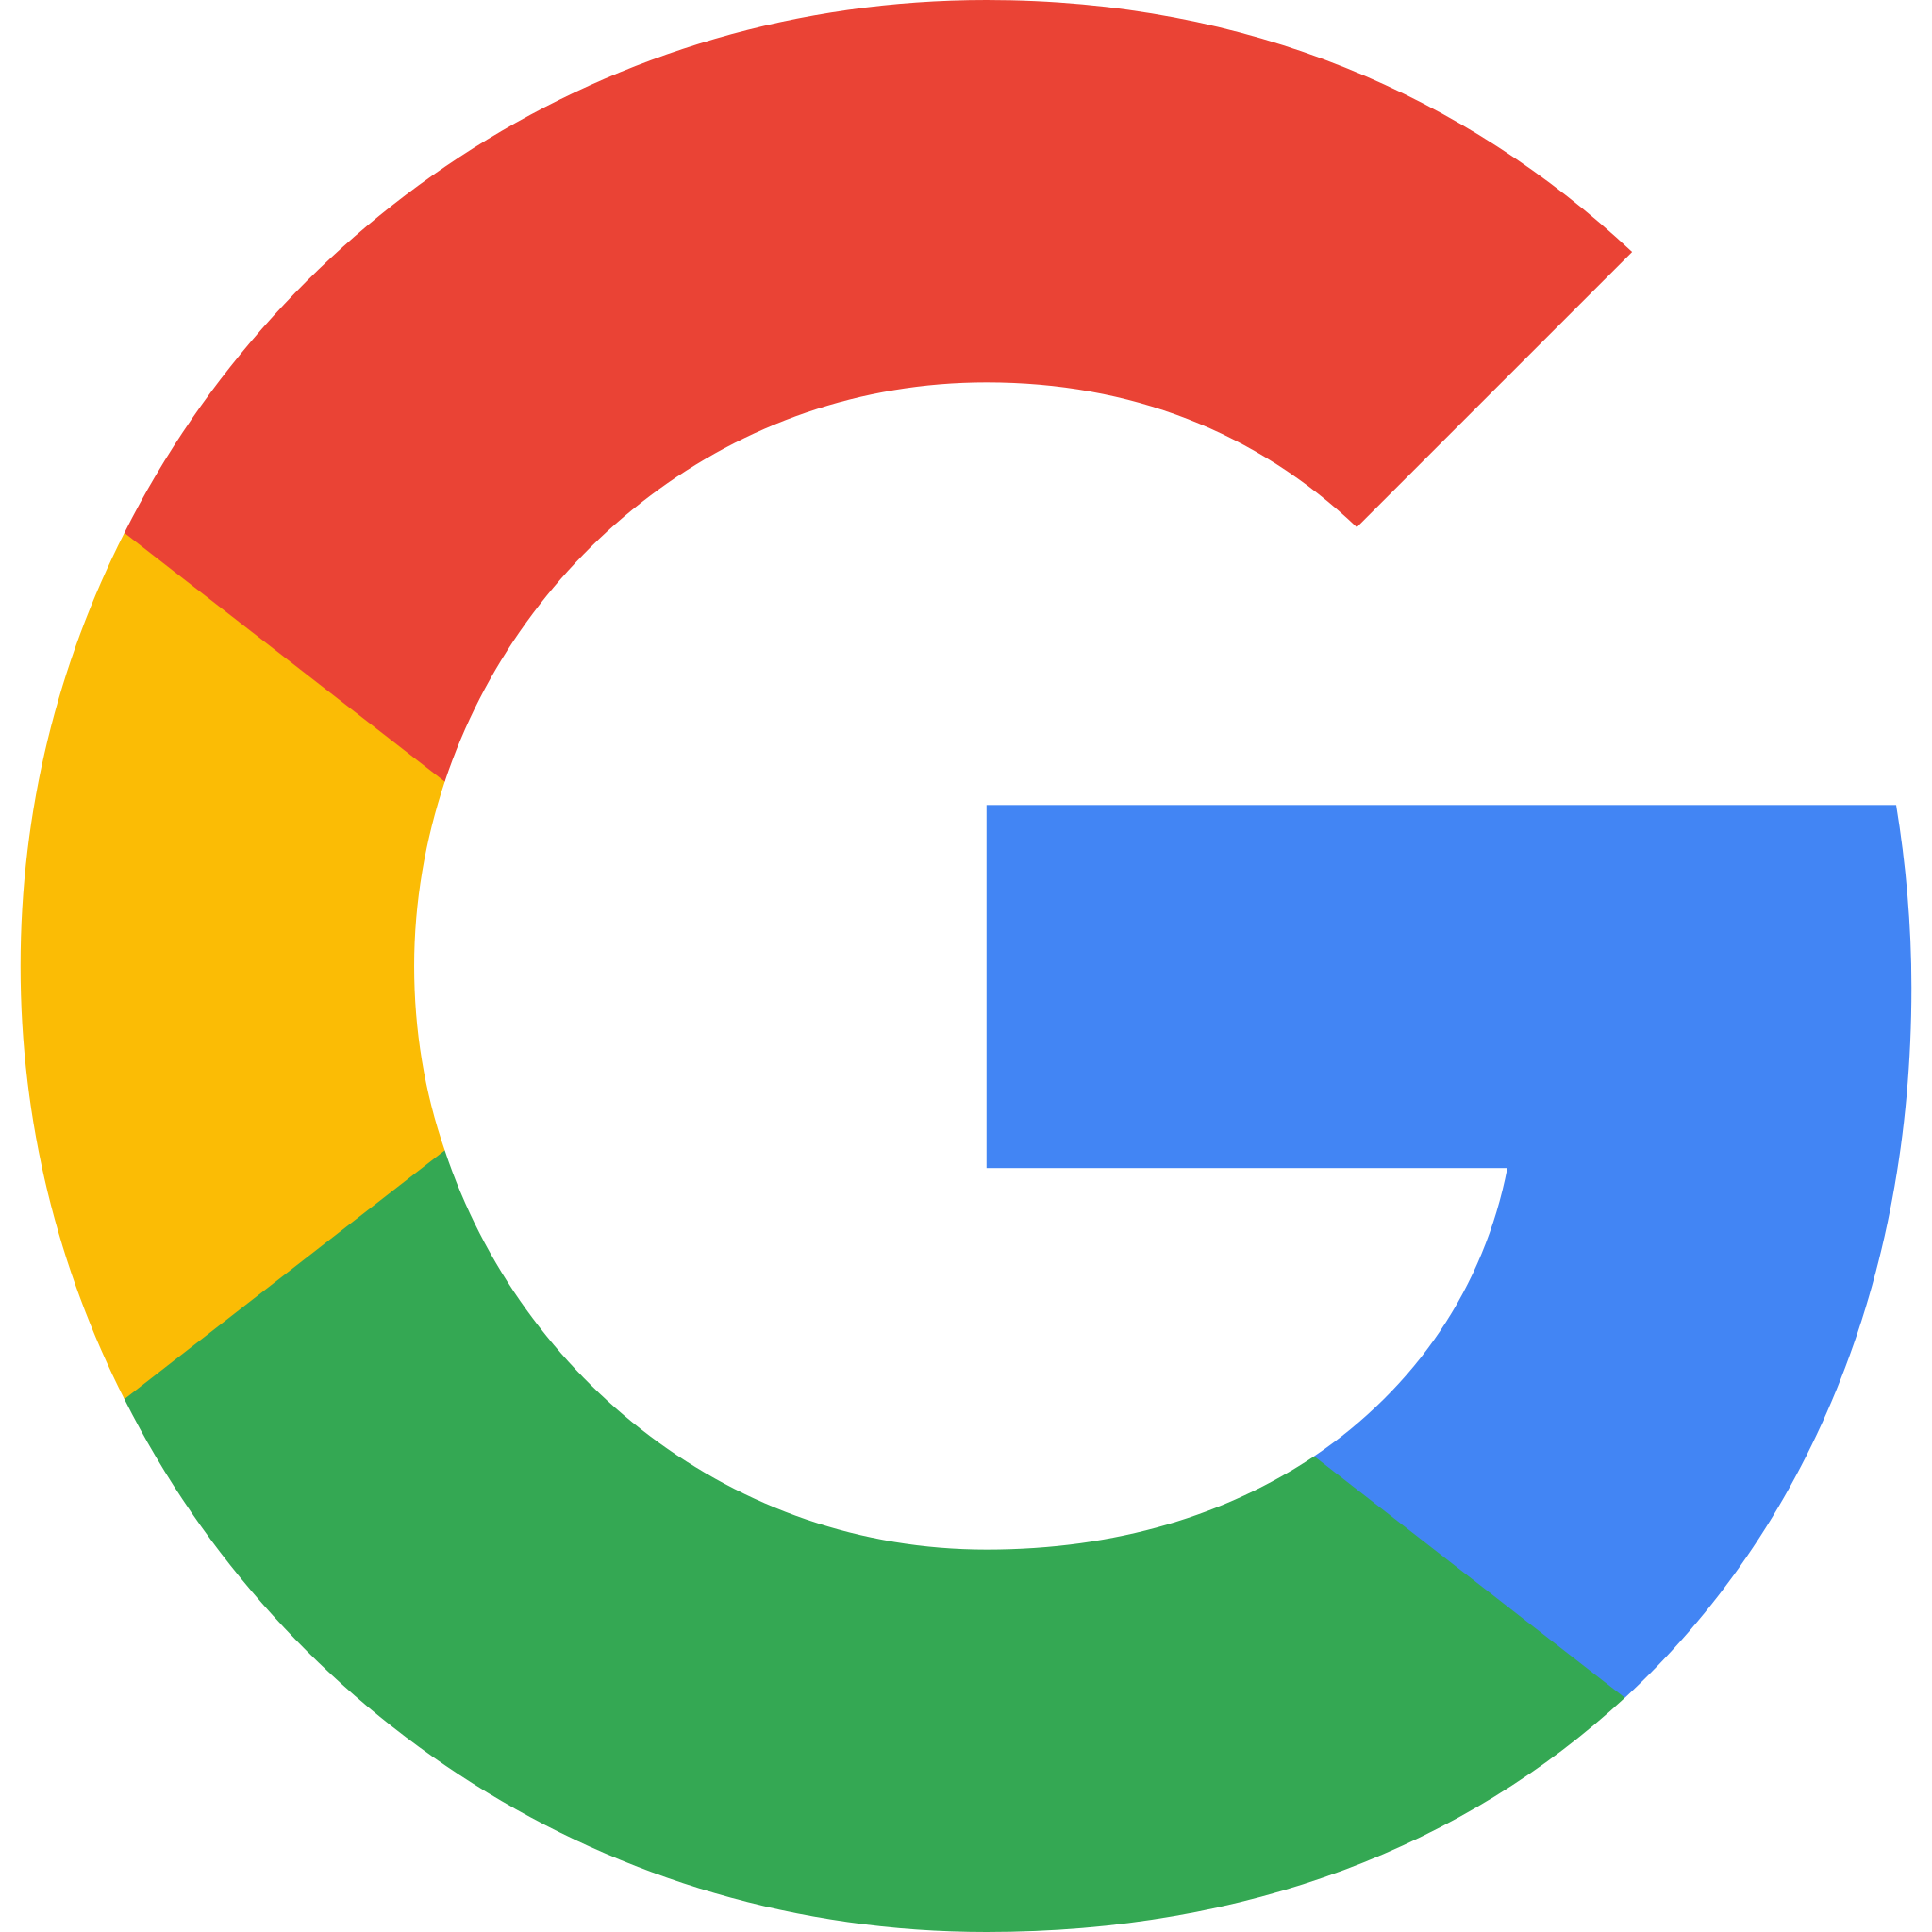 goole logo